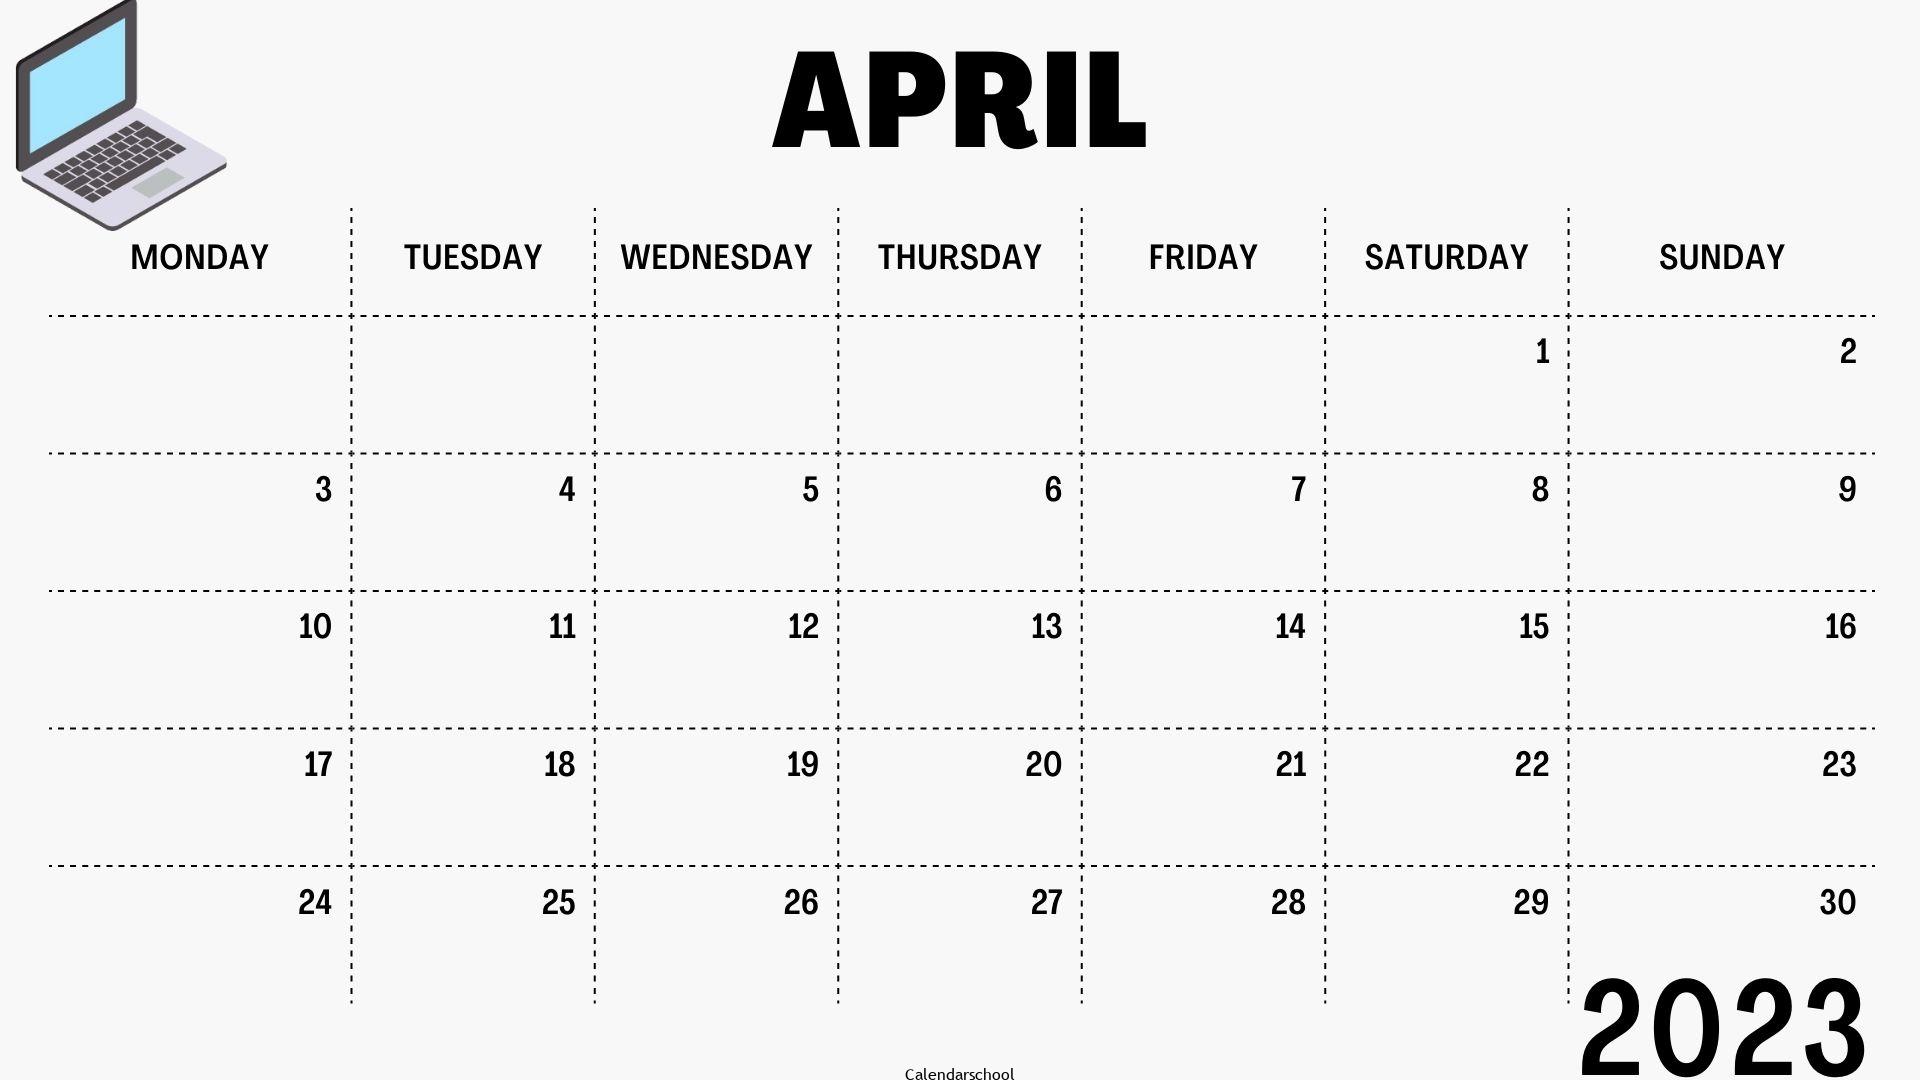 April 2023 Printable Calendar By Month